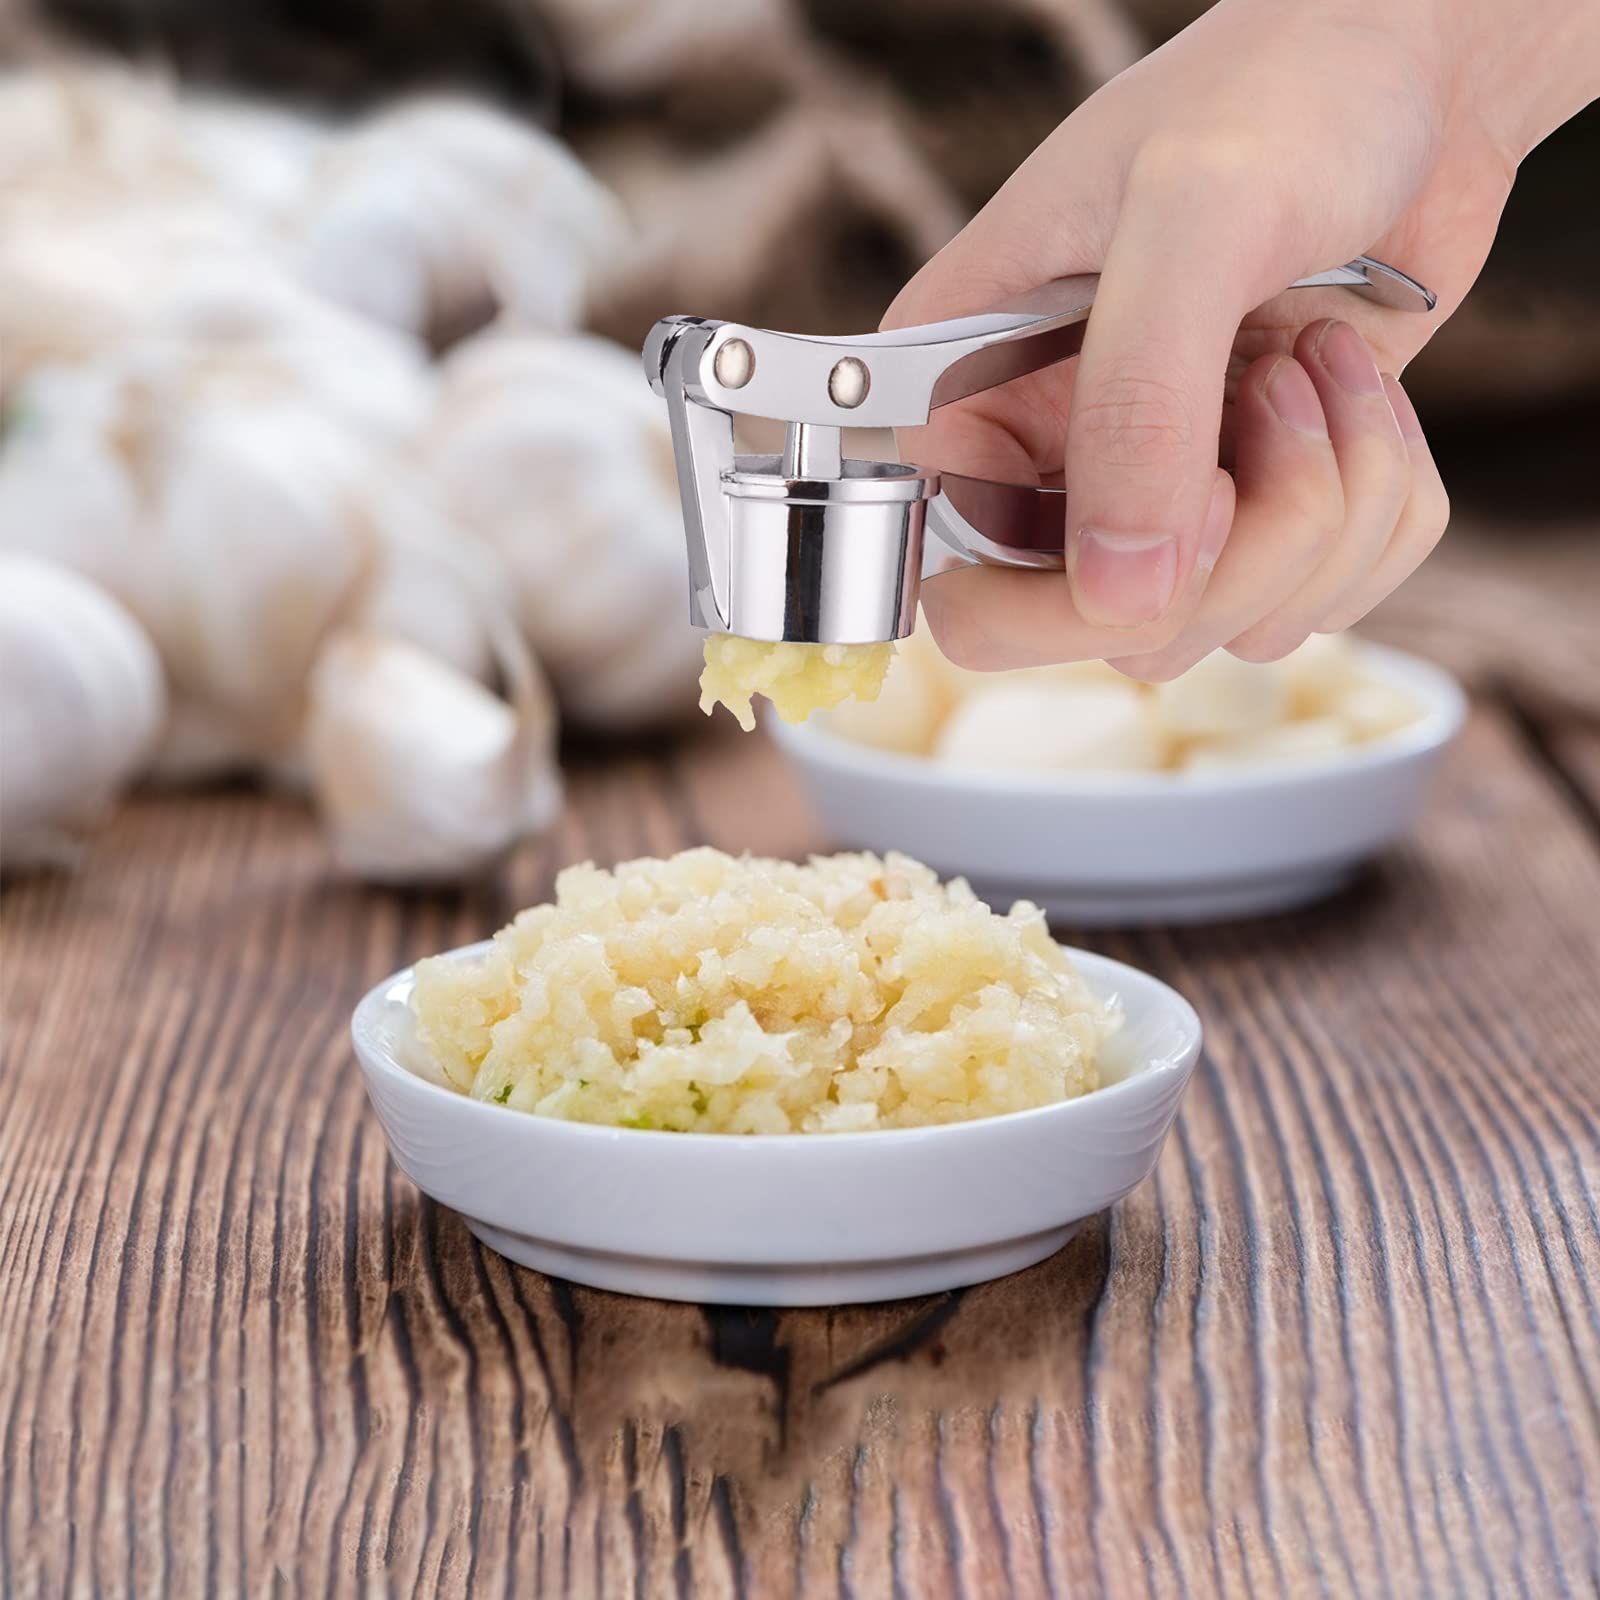 Jsdoin Professional Kitchen Garlic Press/ Mincer/ Crusher UK, Peeler Squeezer Heavy Duty Garlic Presser,User-Friendly Chopper, Easy to Clean and Durable